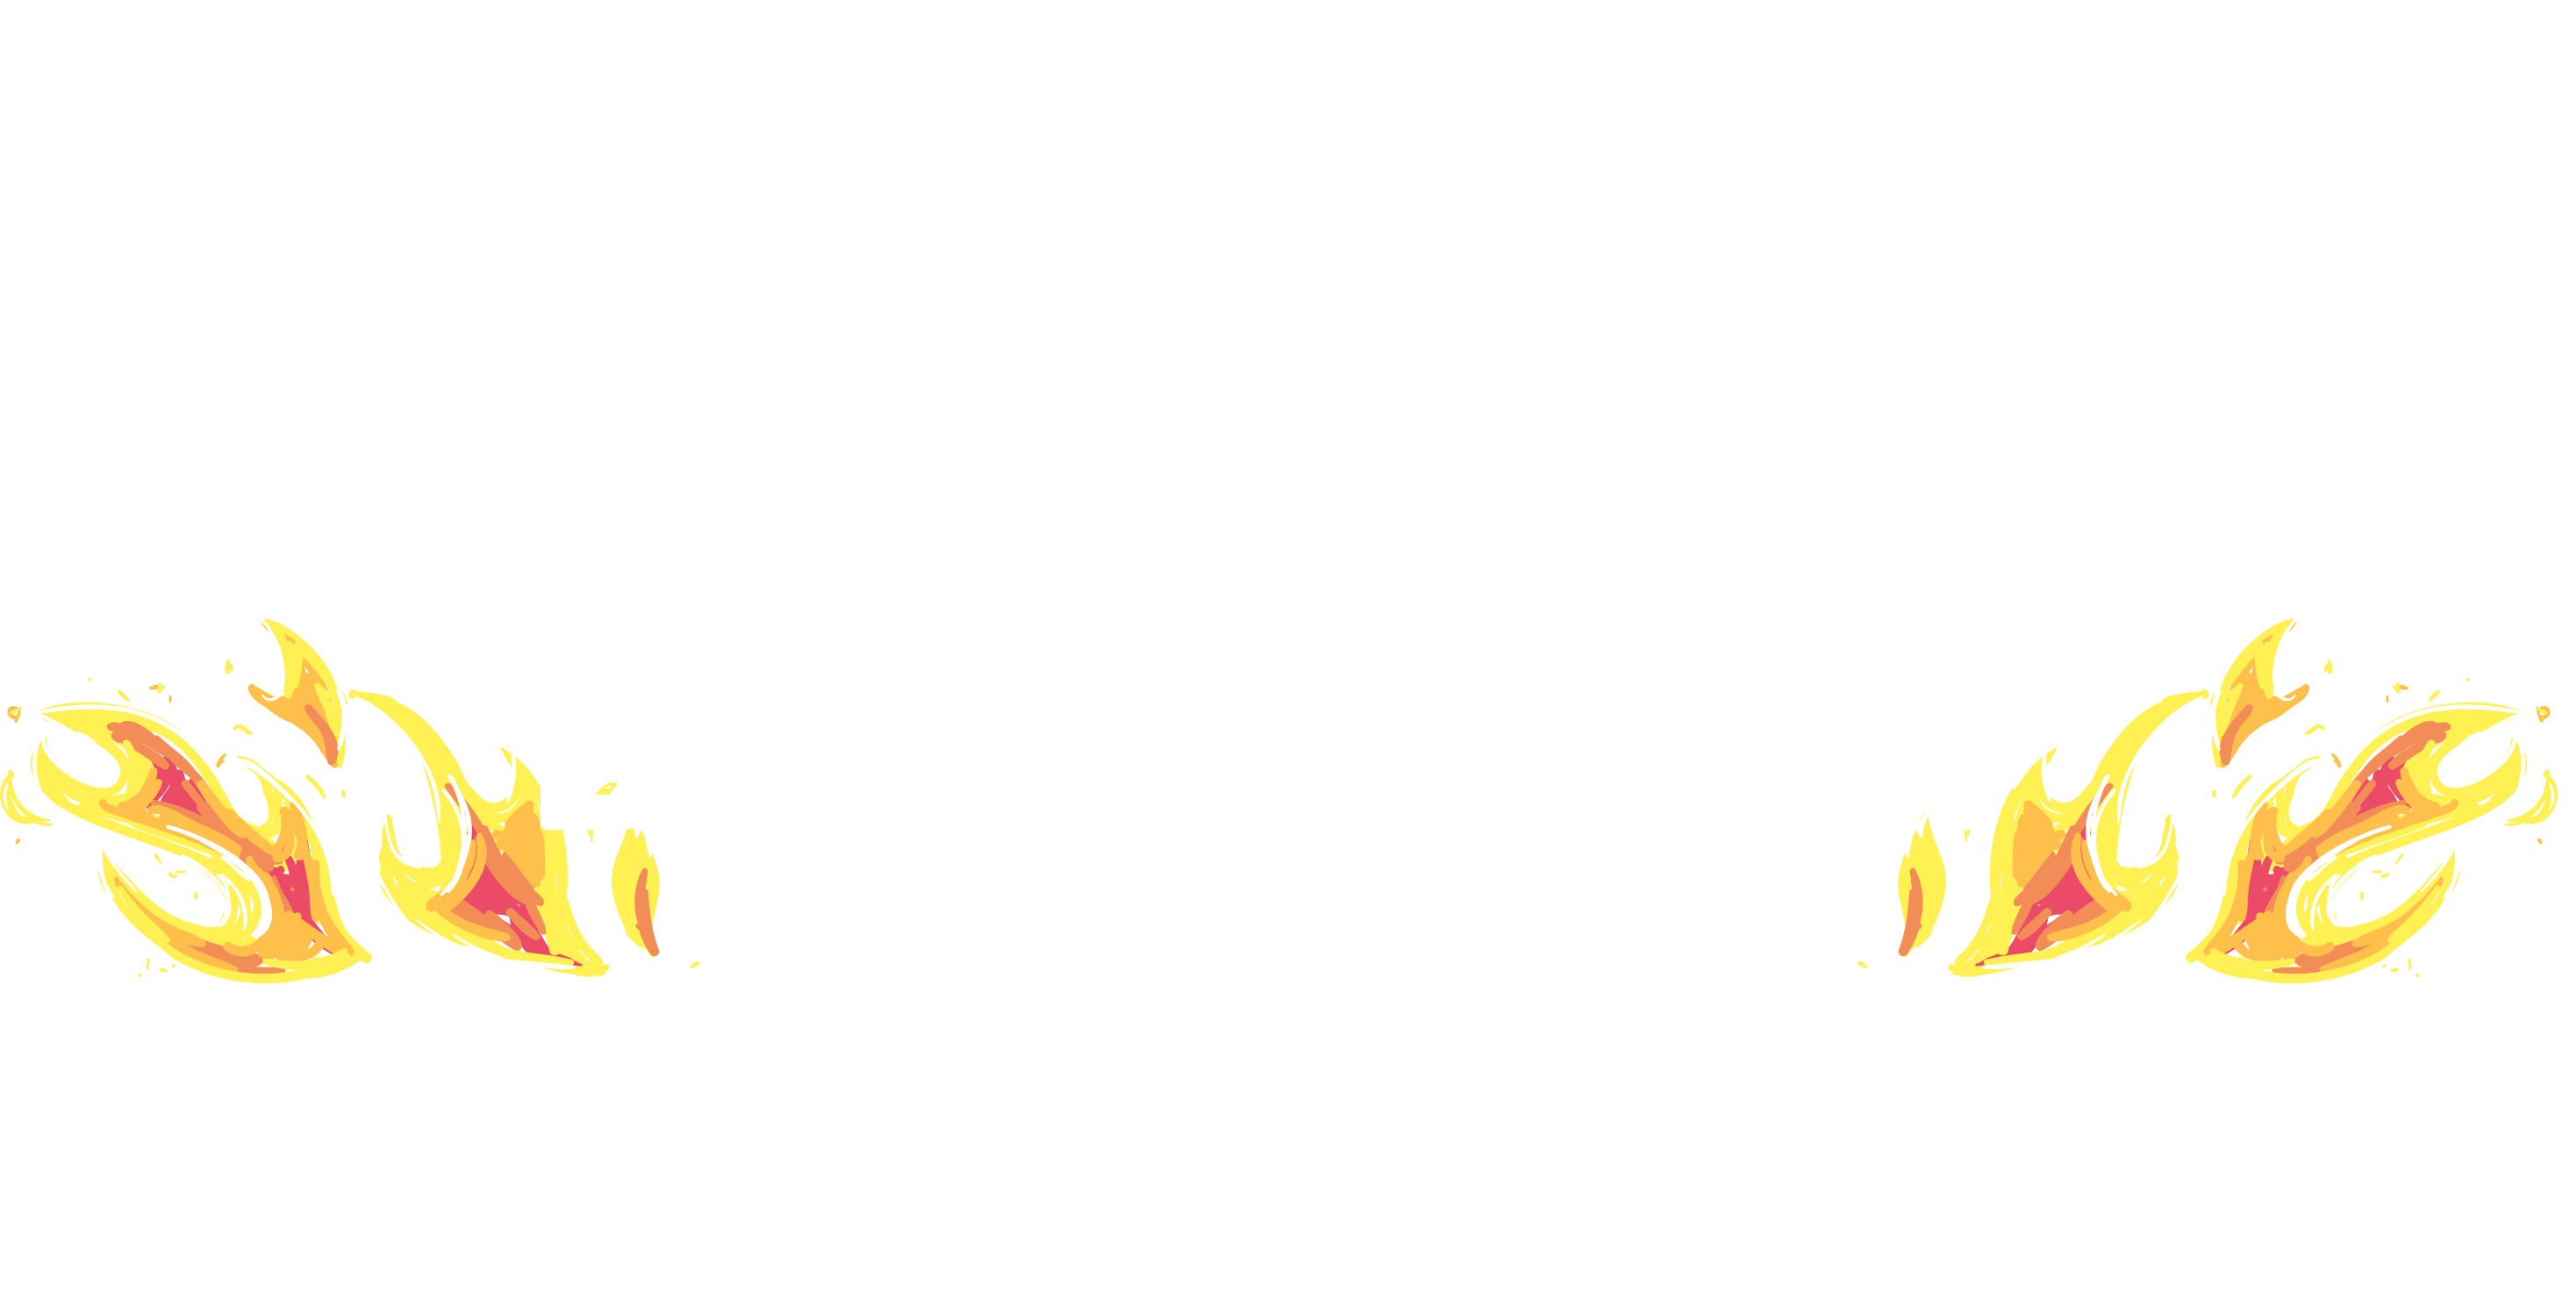 Good ole butt rubbin